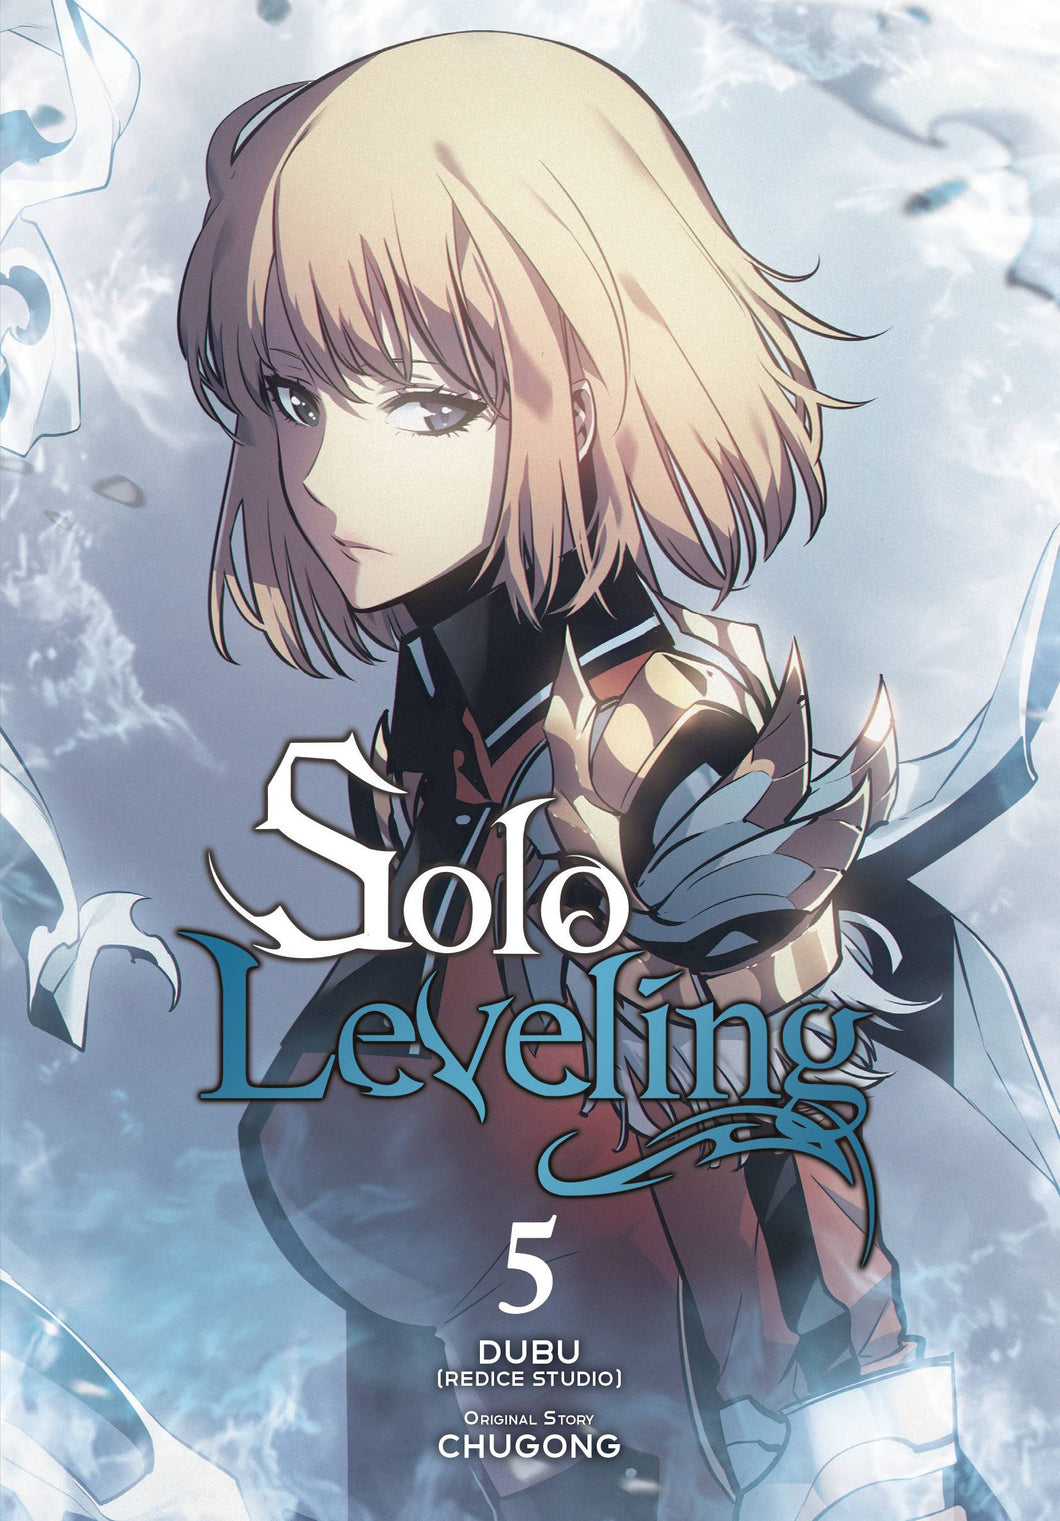 Solo Leveling GN Vol 05 - Books